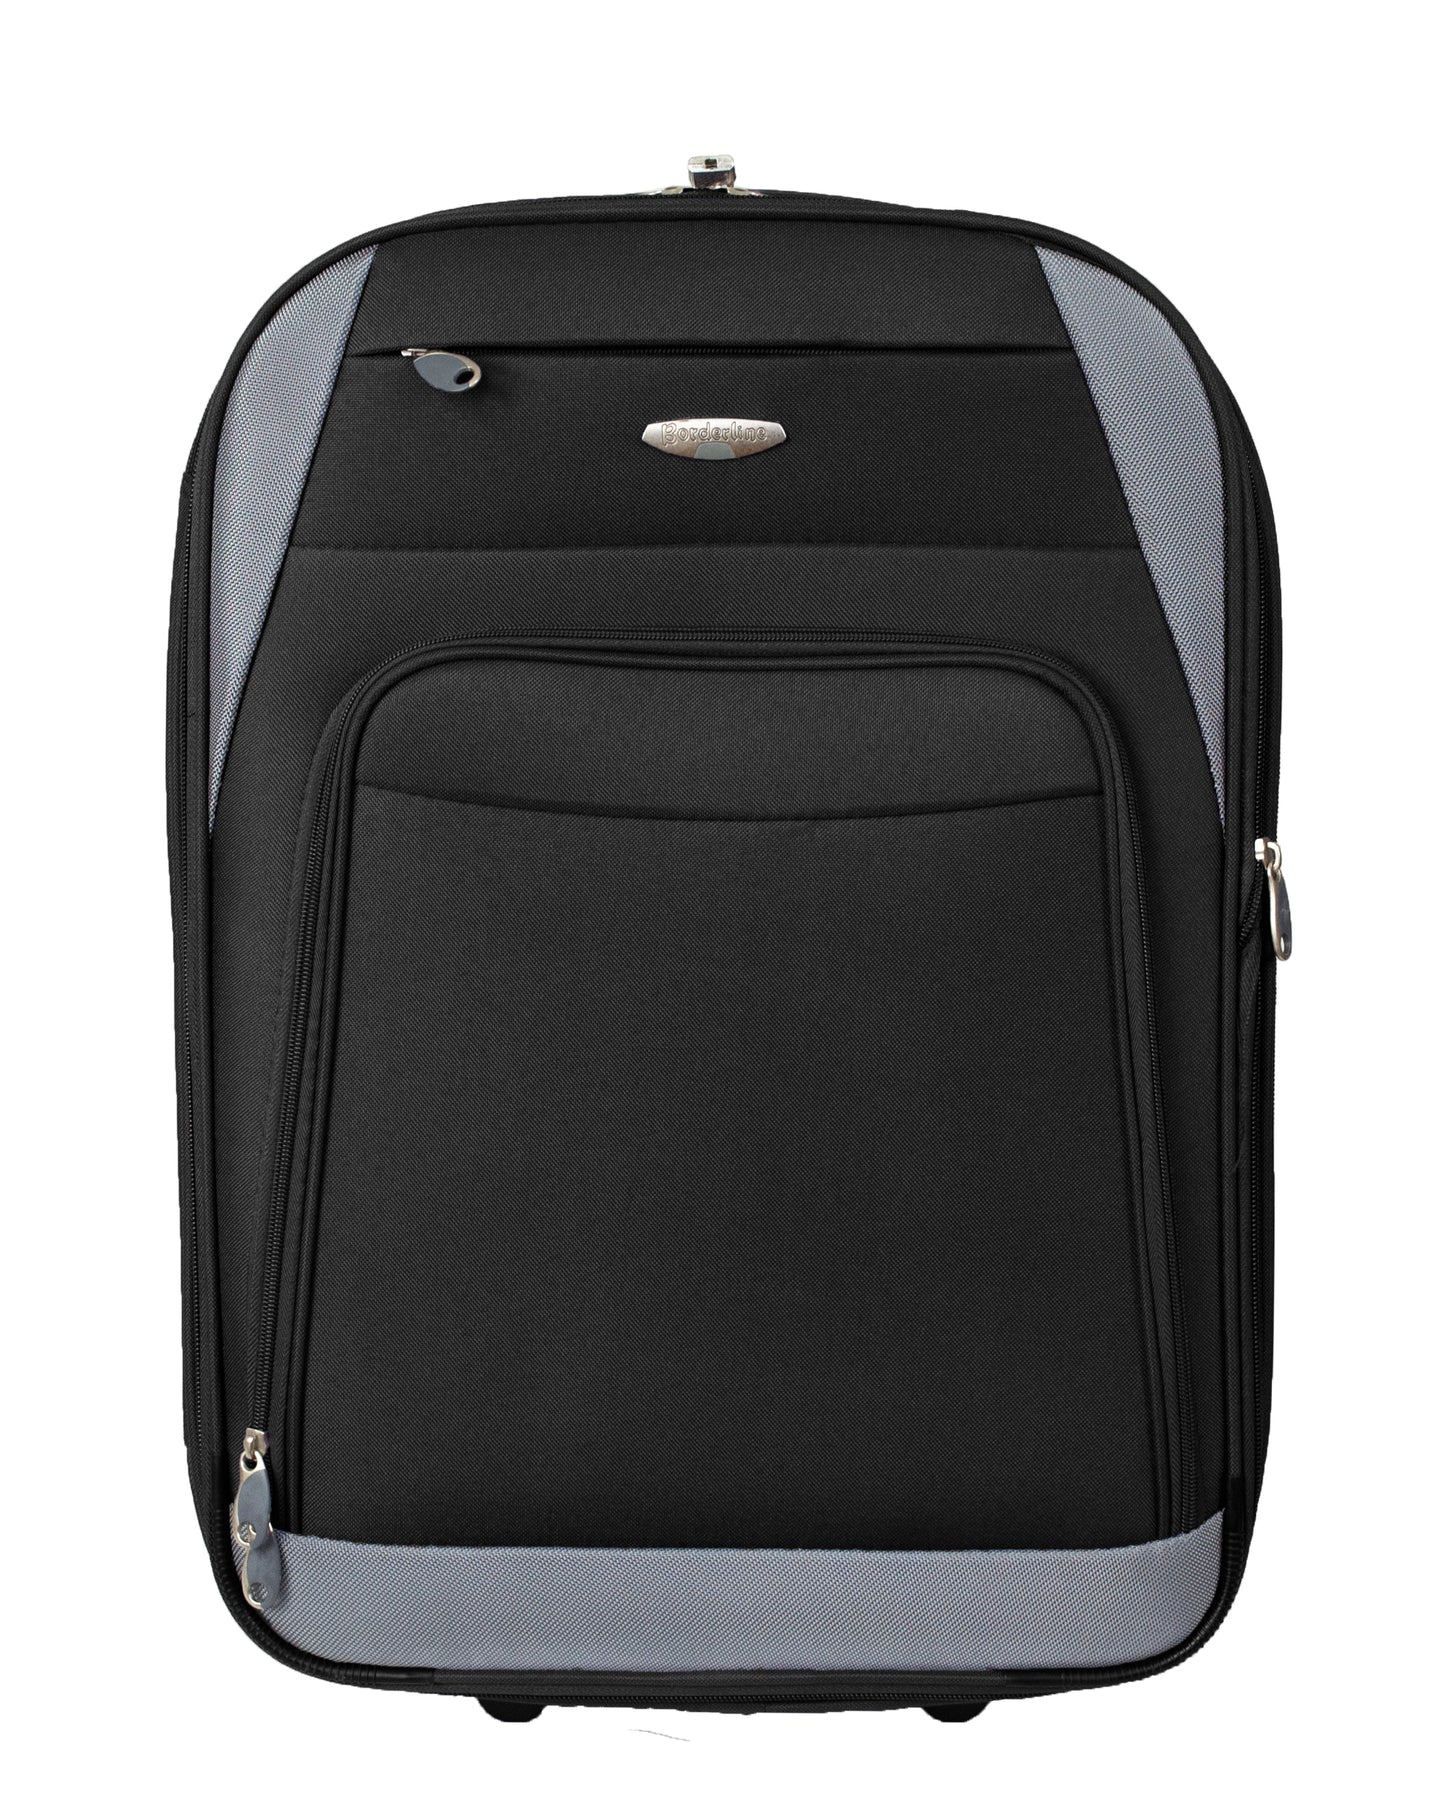 2 Wheels Soft Case Luggage Black